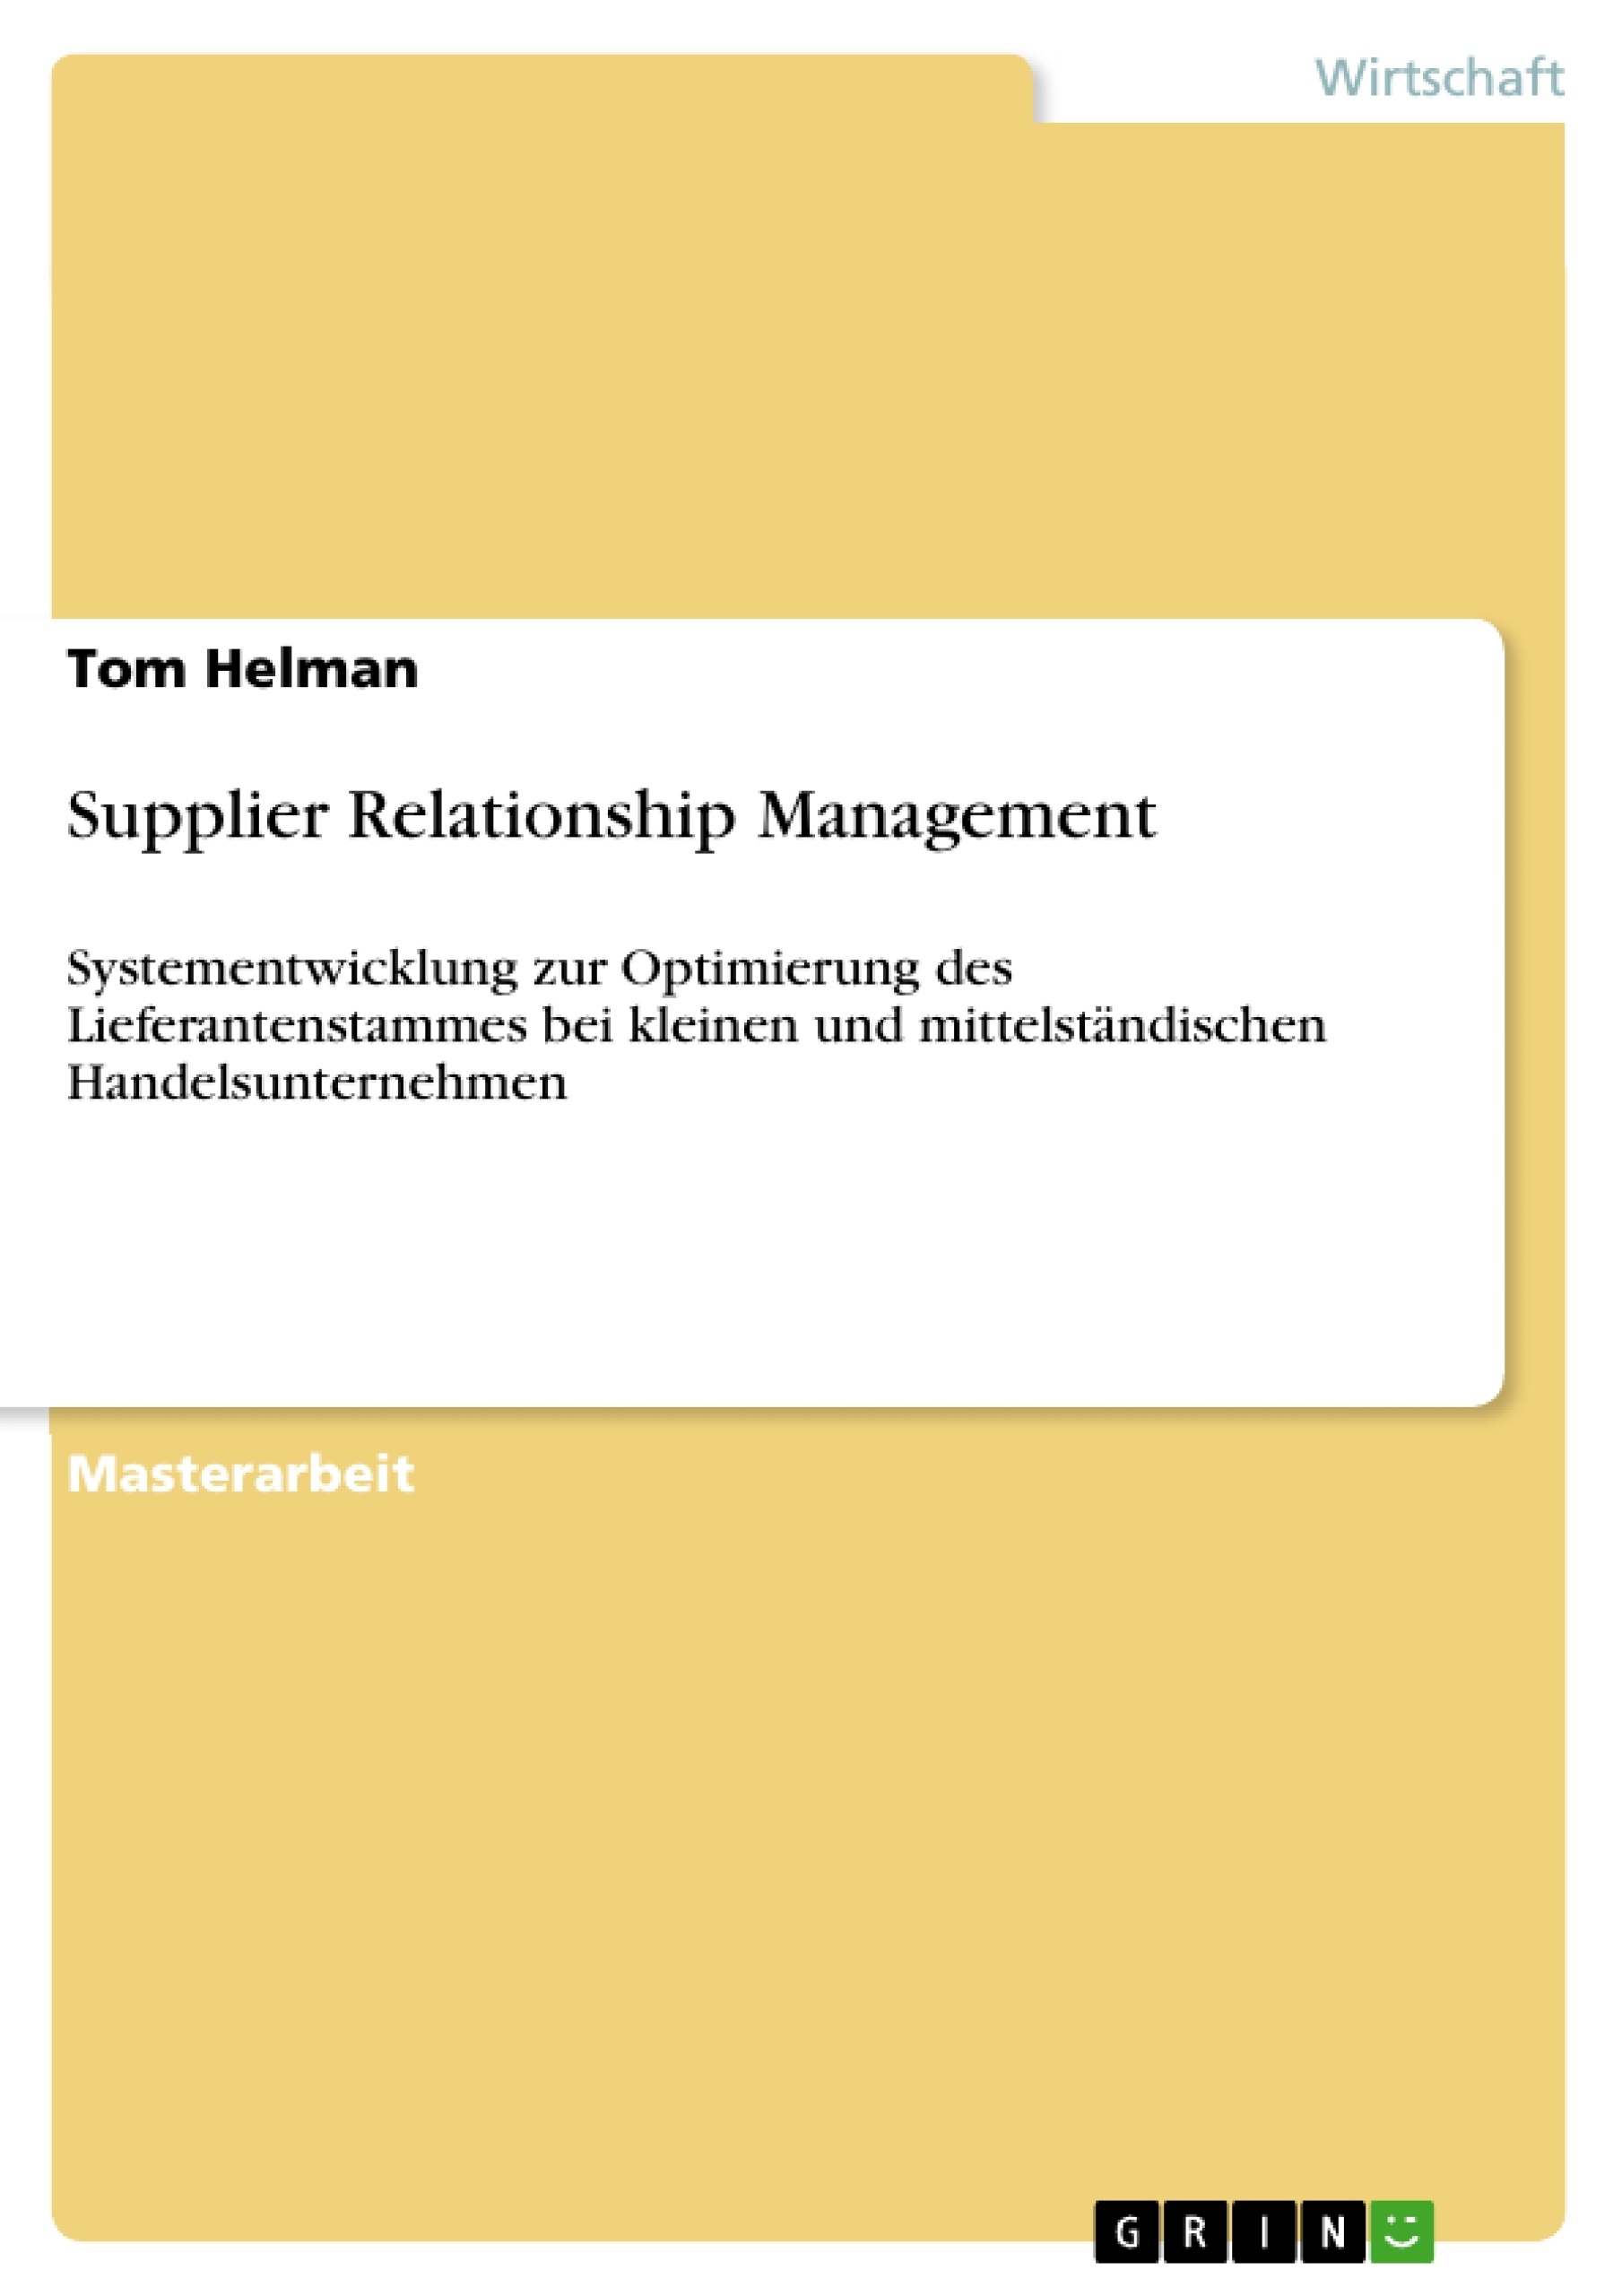 Title: Supplier Relationship Management